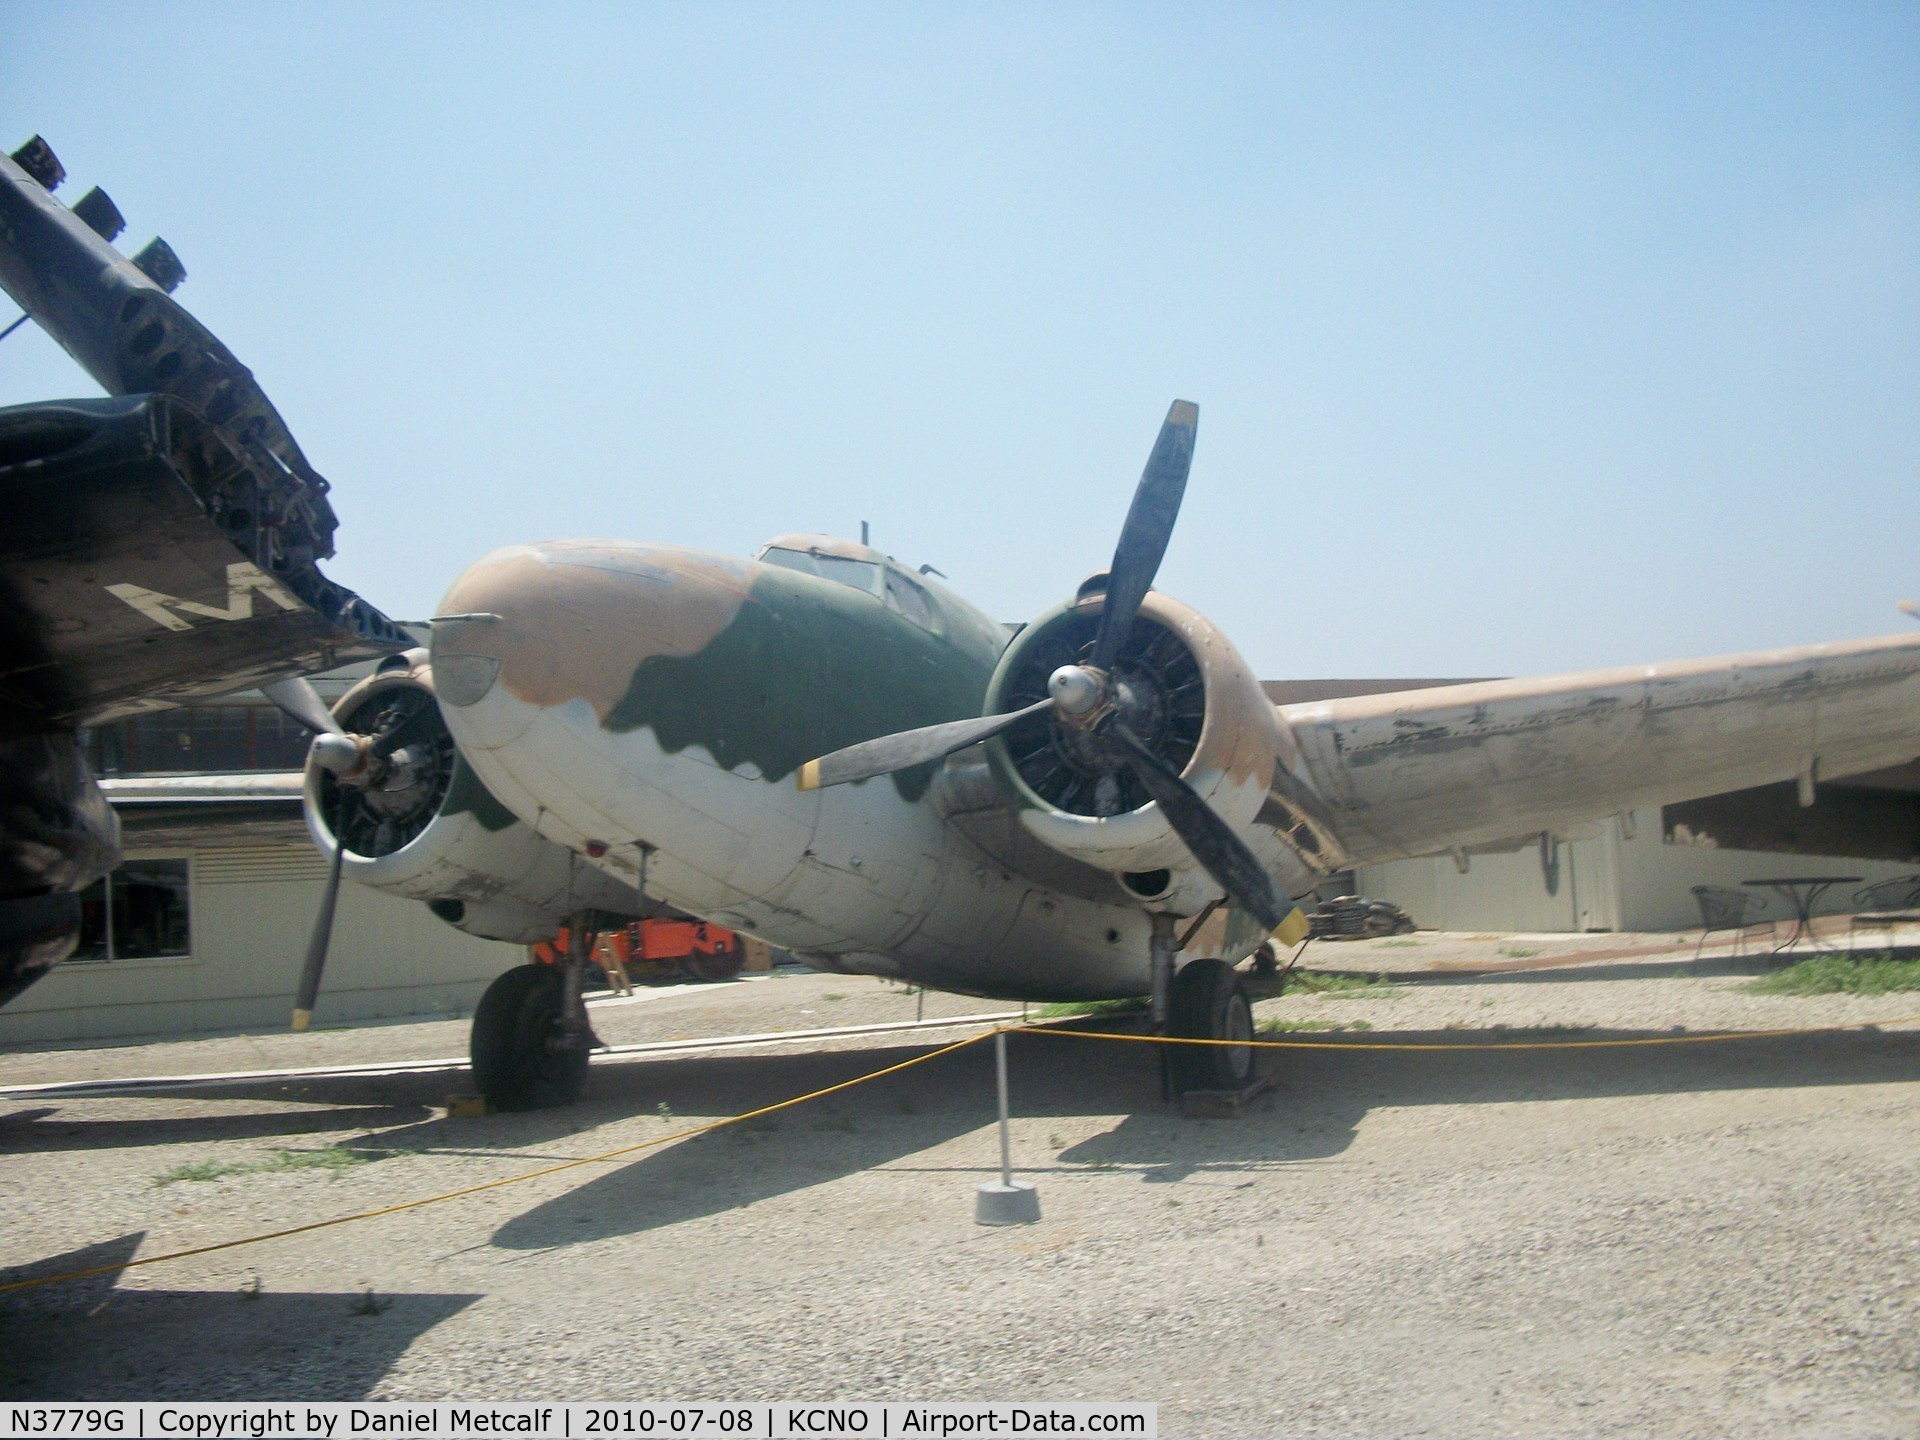 N3779G, Lockheed 18-56 Lodestar C/N 2201, Planes of Fame Air Museum (Chino, California Location)